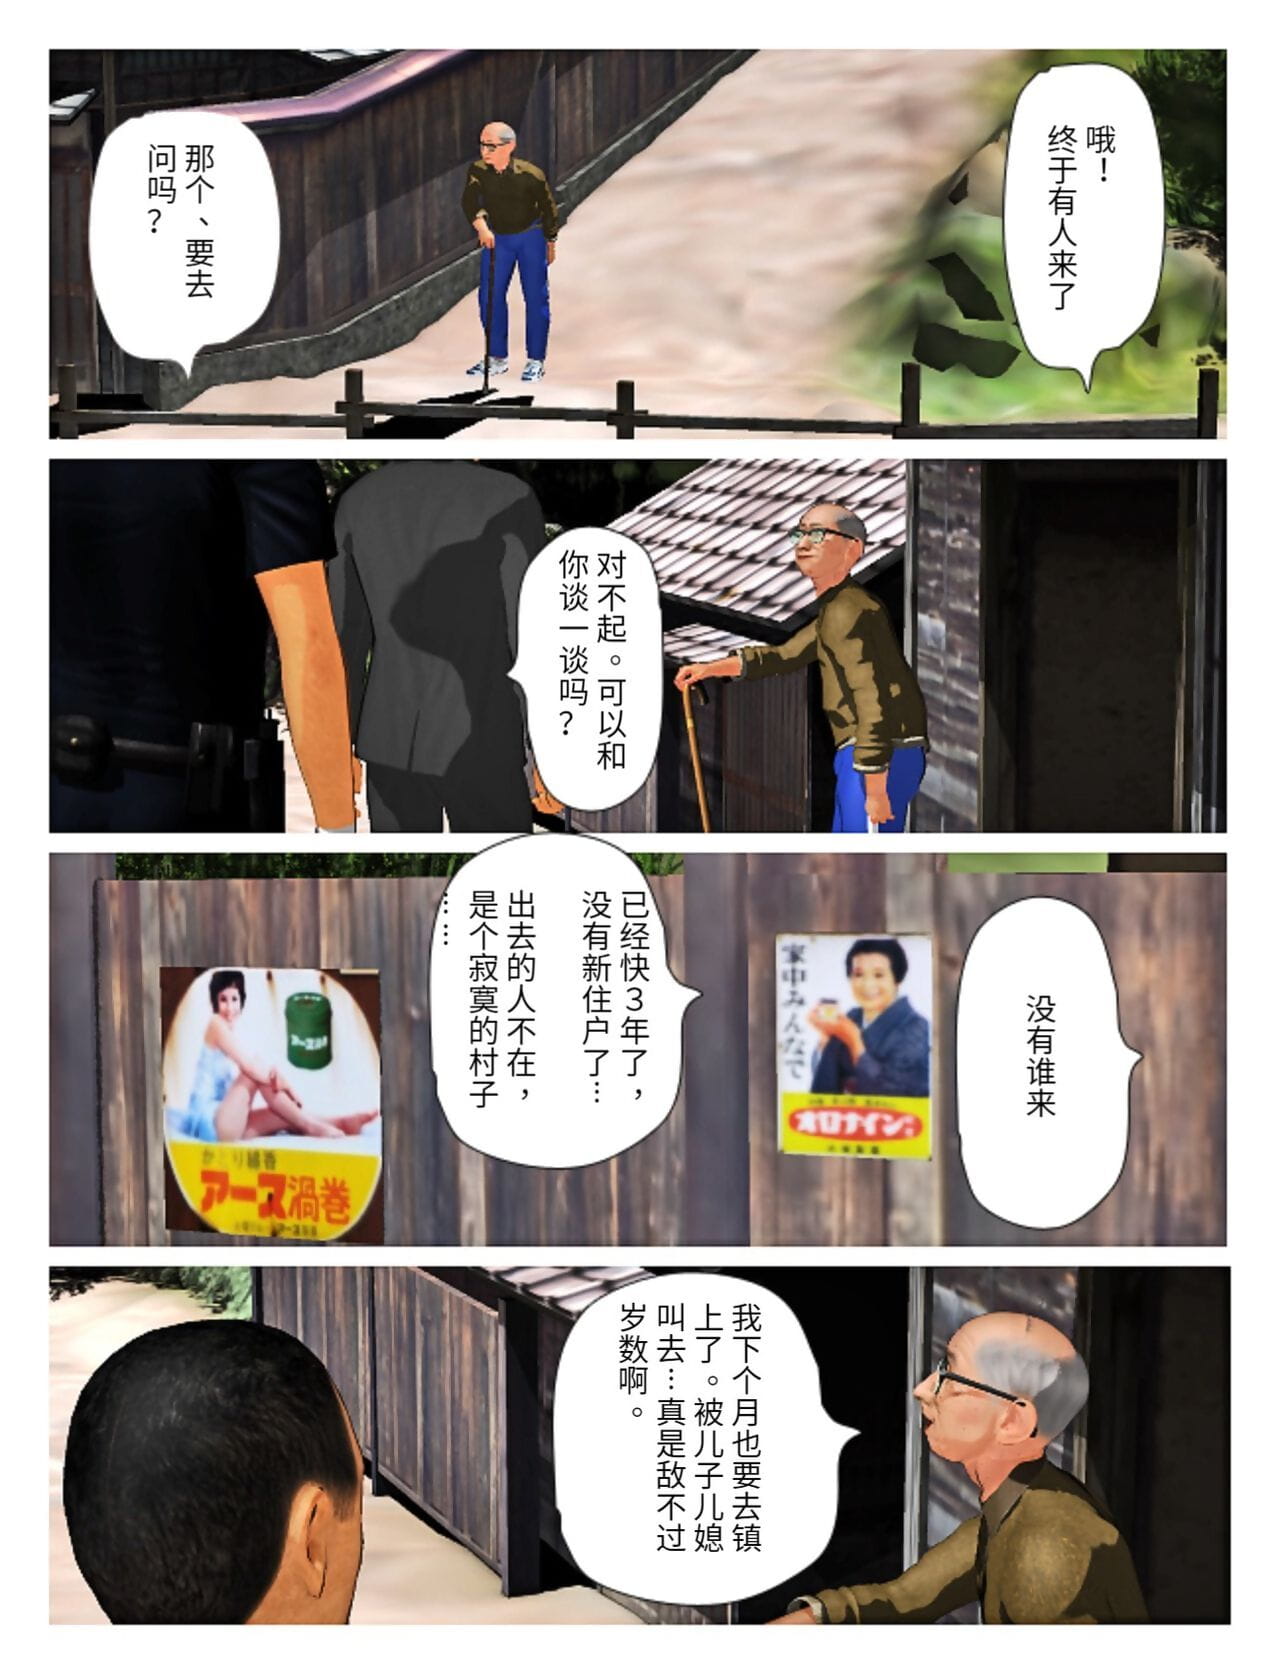 Kyou no Misako-san 2019:4 - part 3 page 1